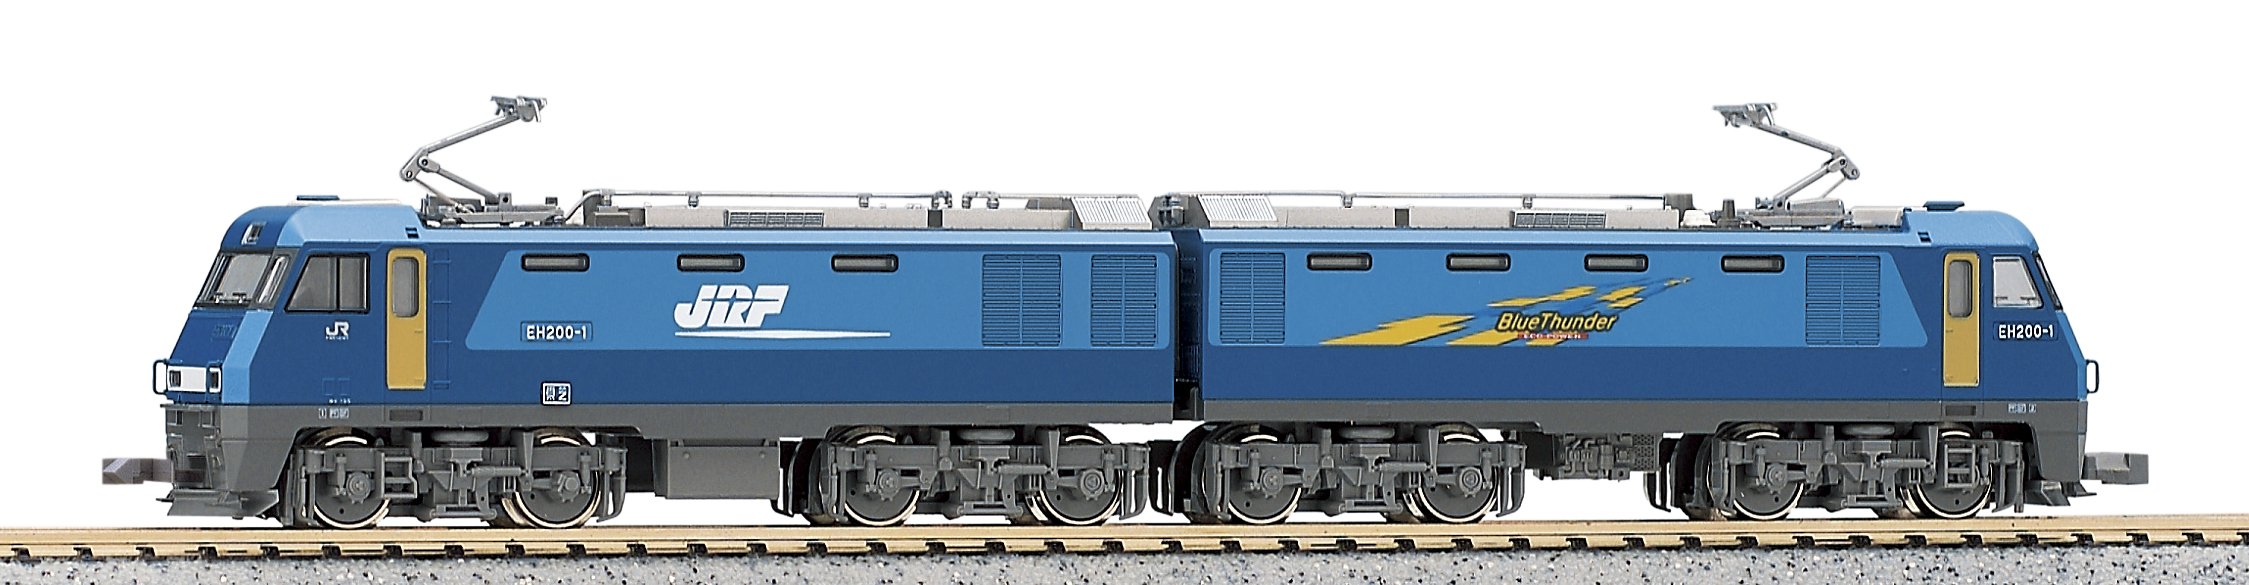 Kato Spur N 3045 Elektrolokomotive - Eisenbahnmodell Eh200